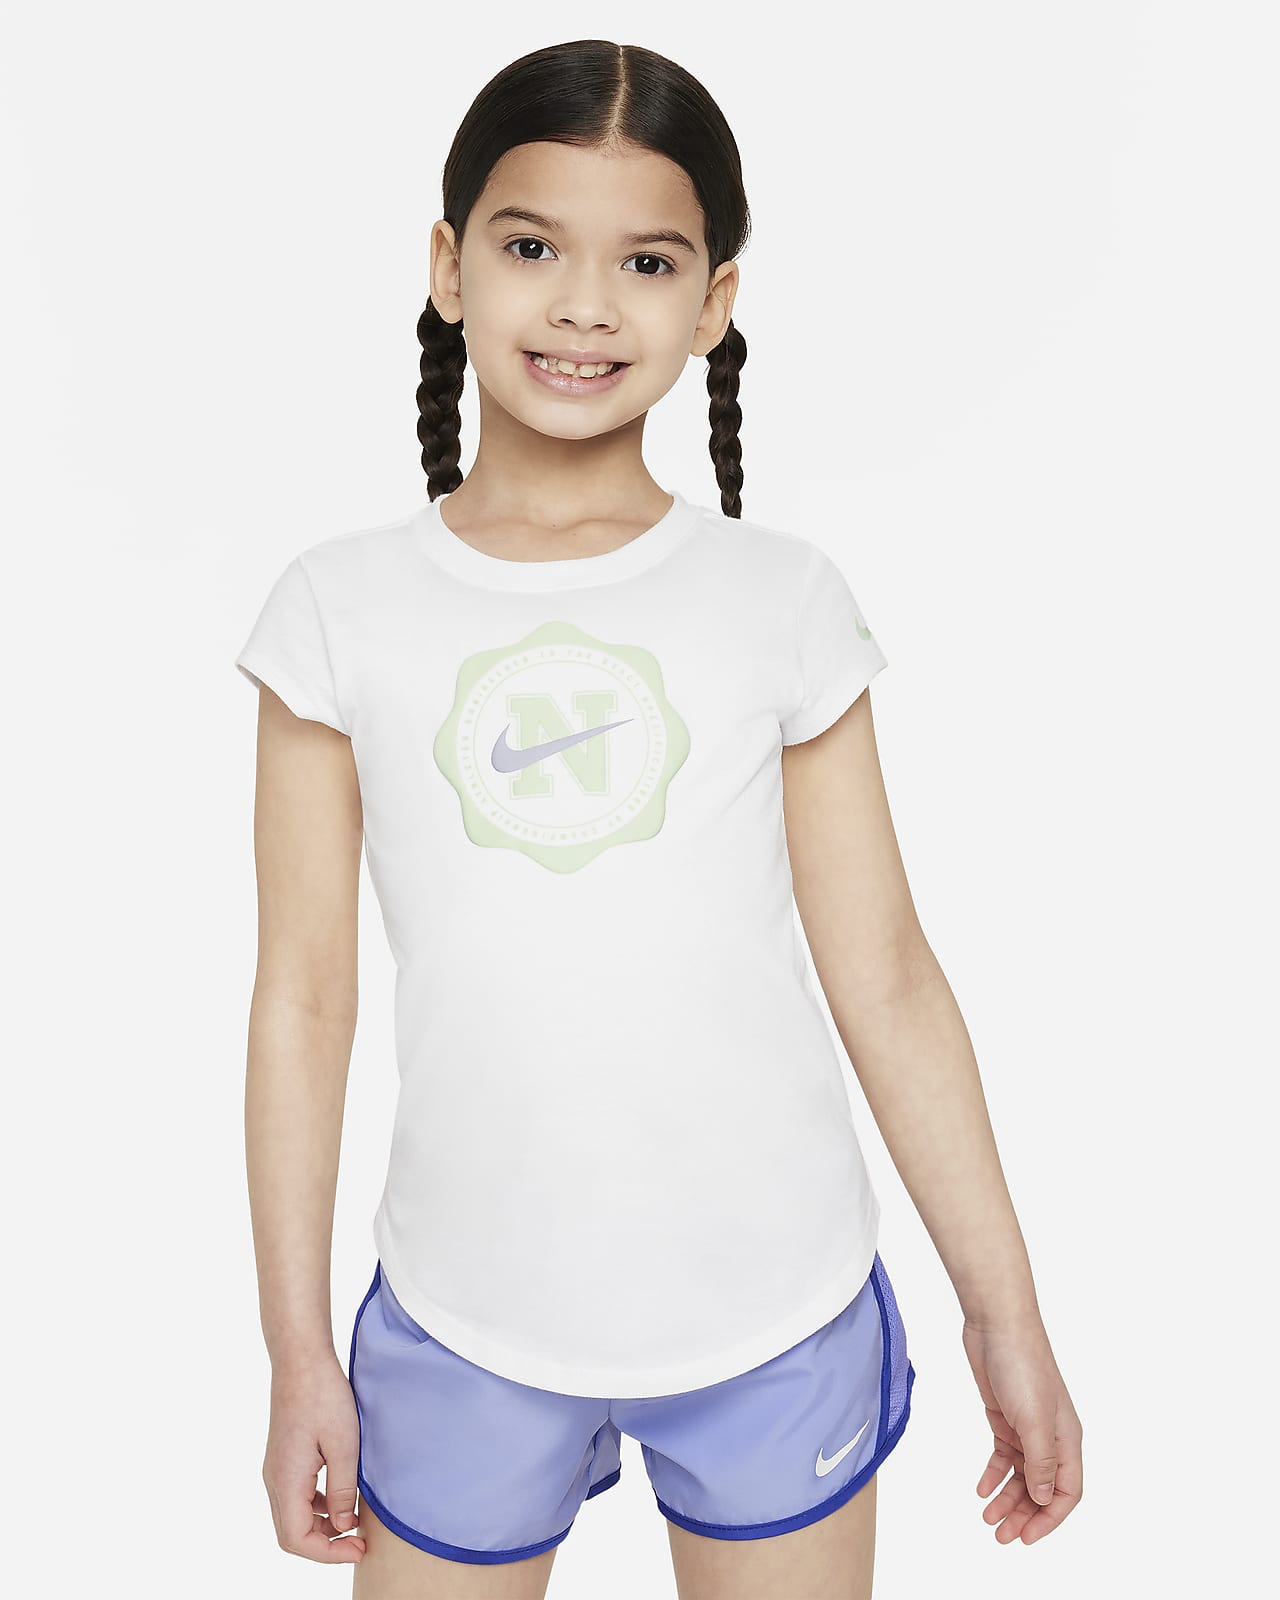 Nike Prep in Your Step T-Shirt mit Grafik für jüngere Kinder